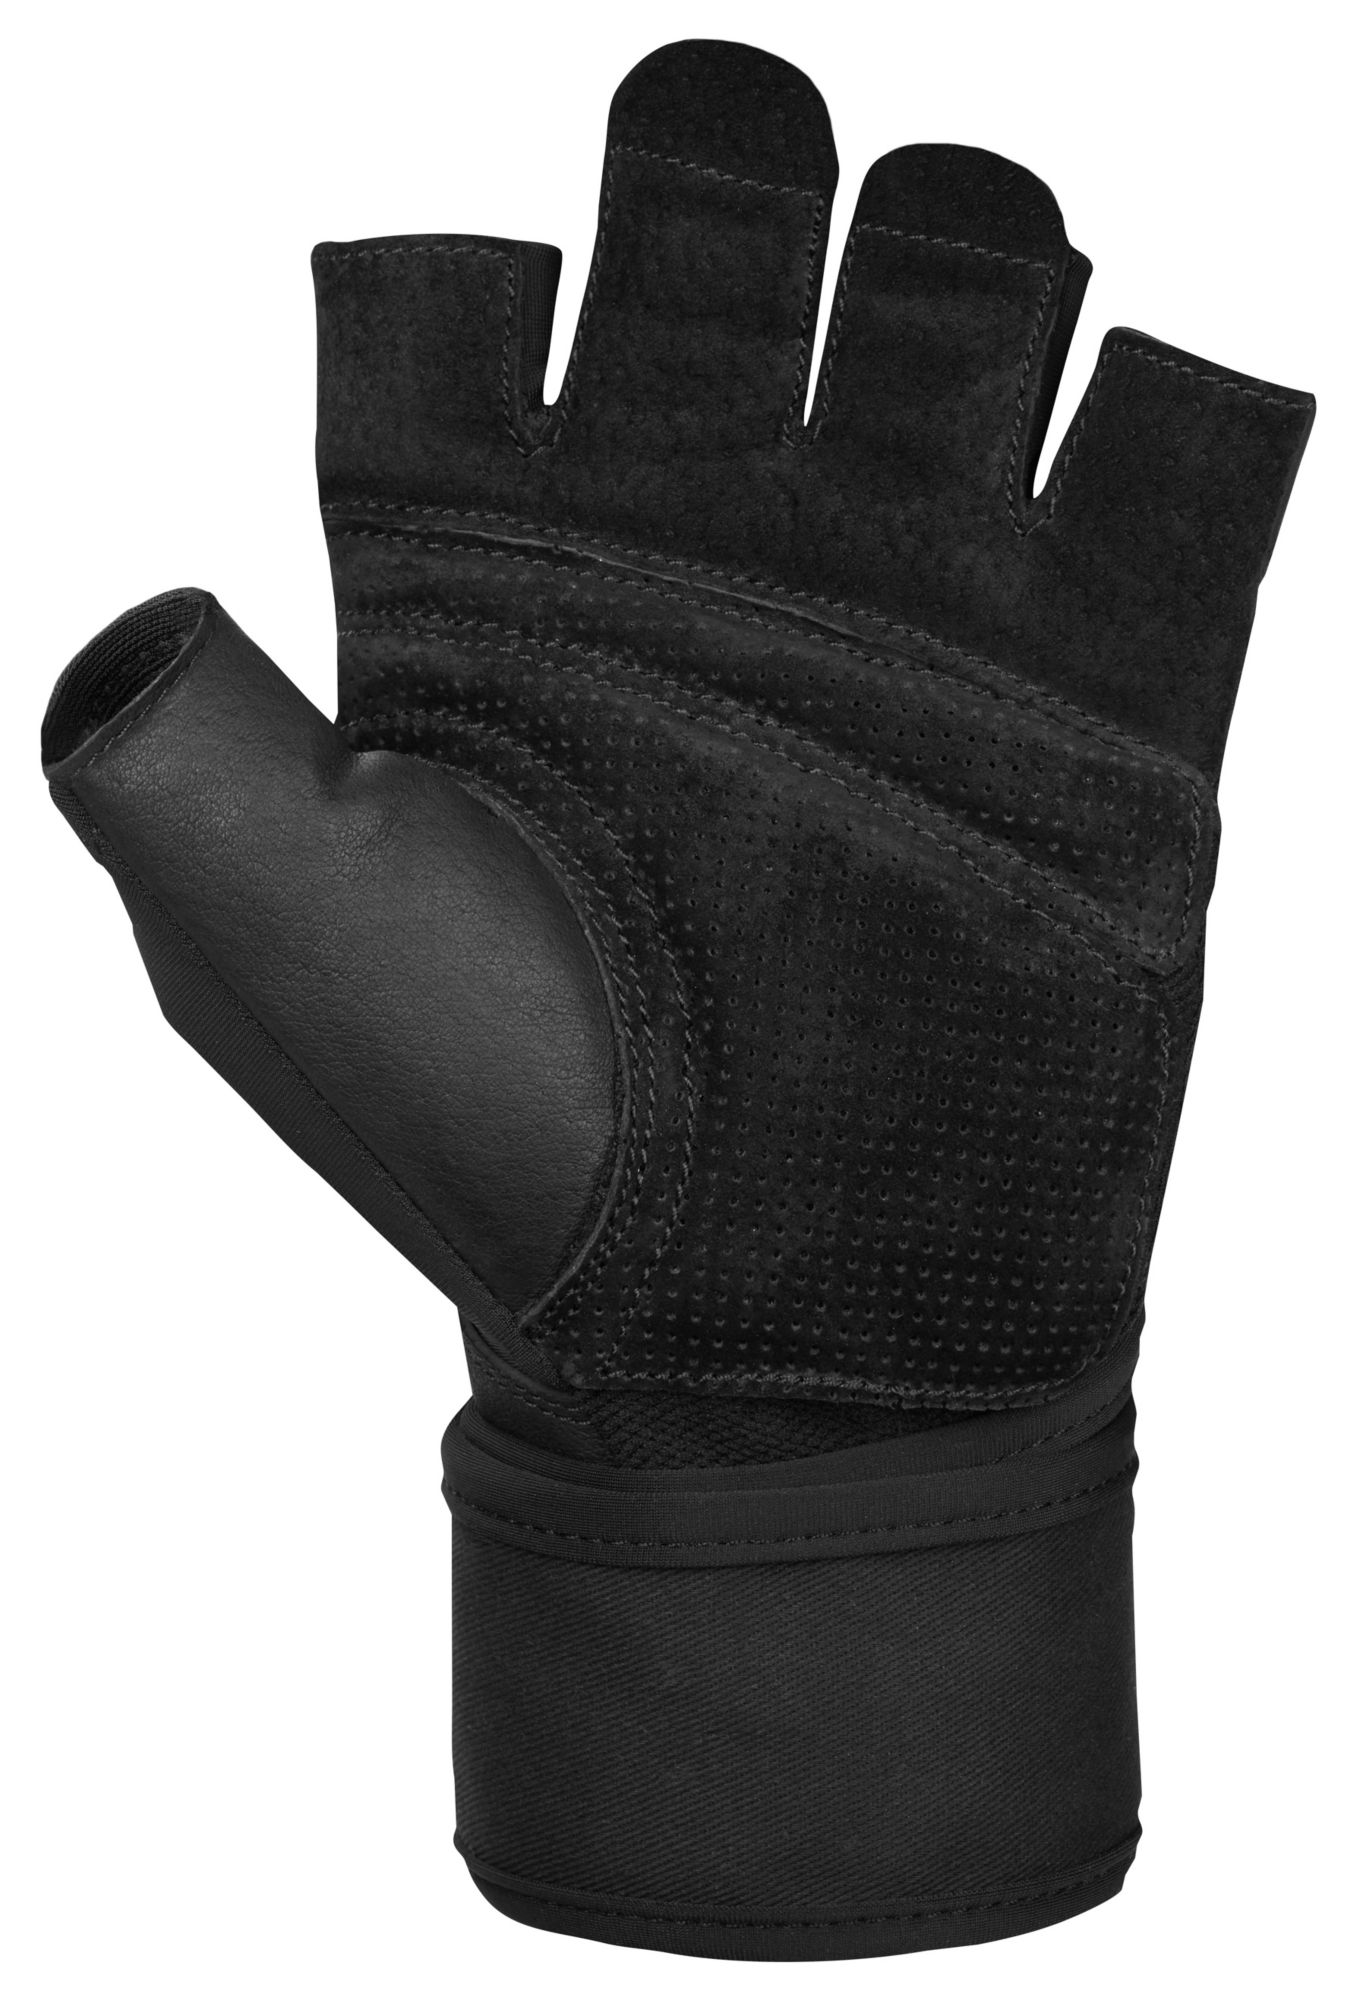 Harbinger Men's Pro Wristwrap Gloves